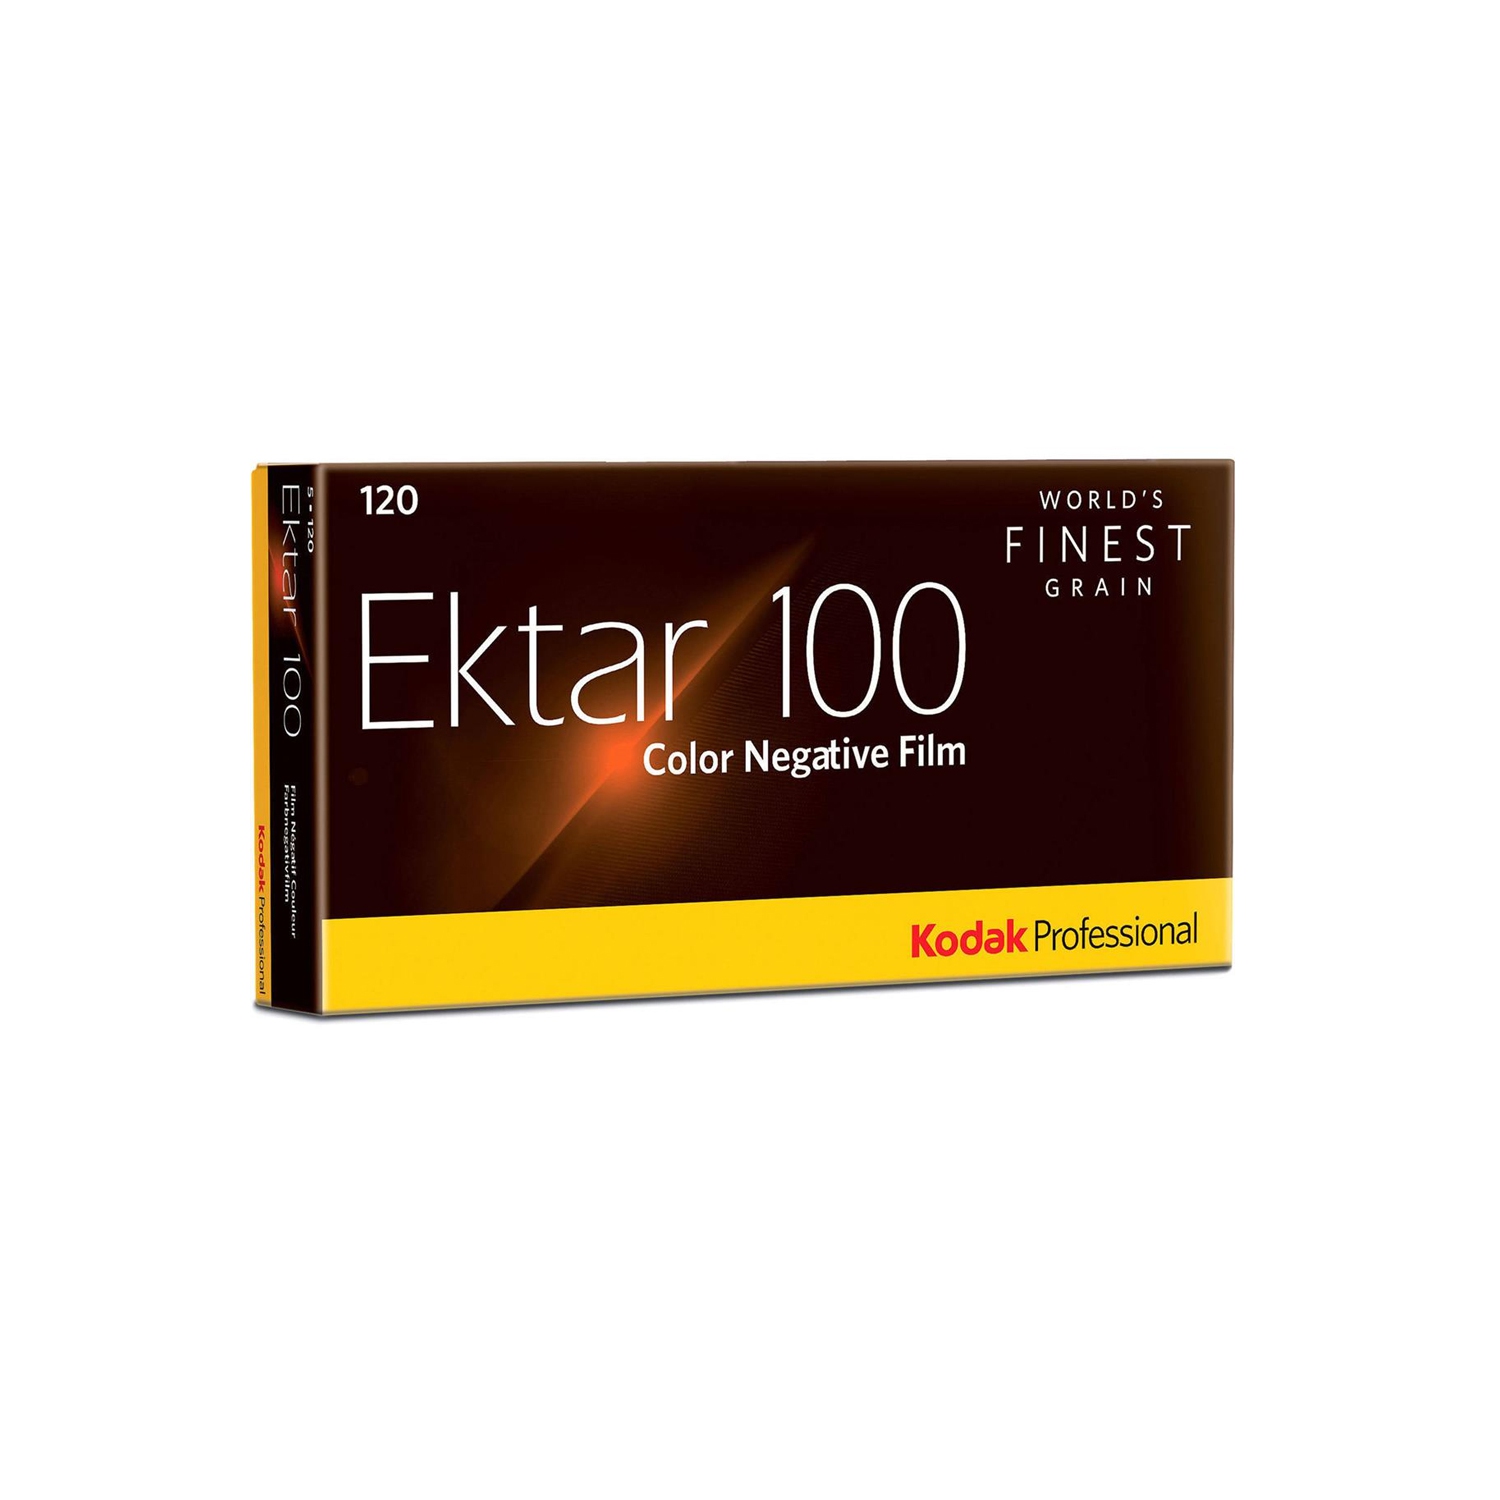 Kodak Professional Ektar Color Negative Film ISO 100, 120 Size, Propack of 5